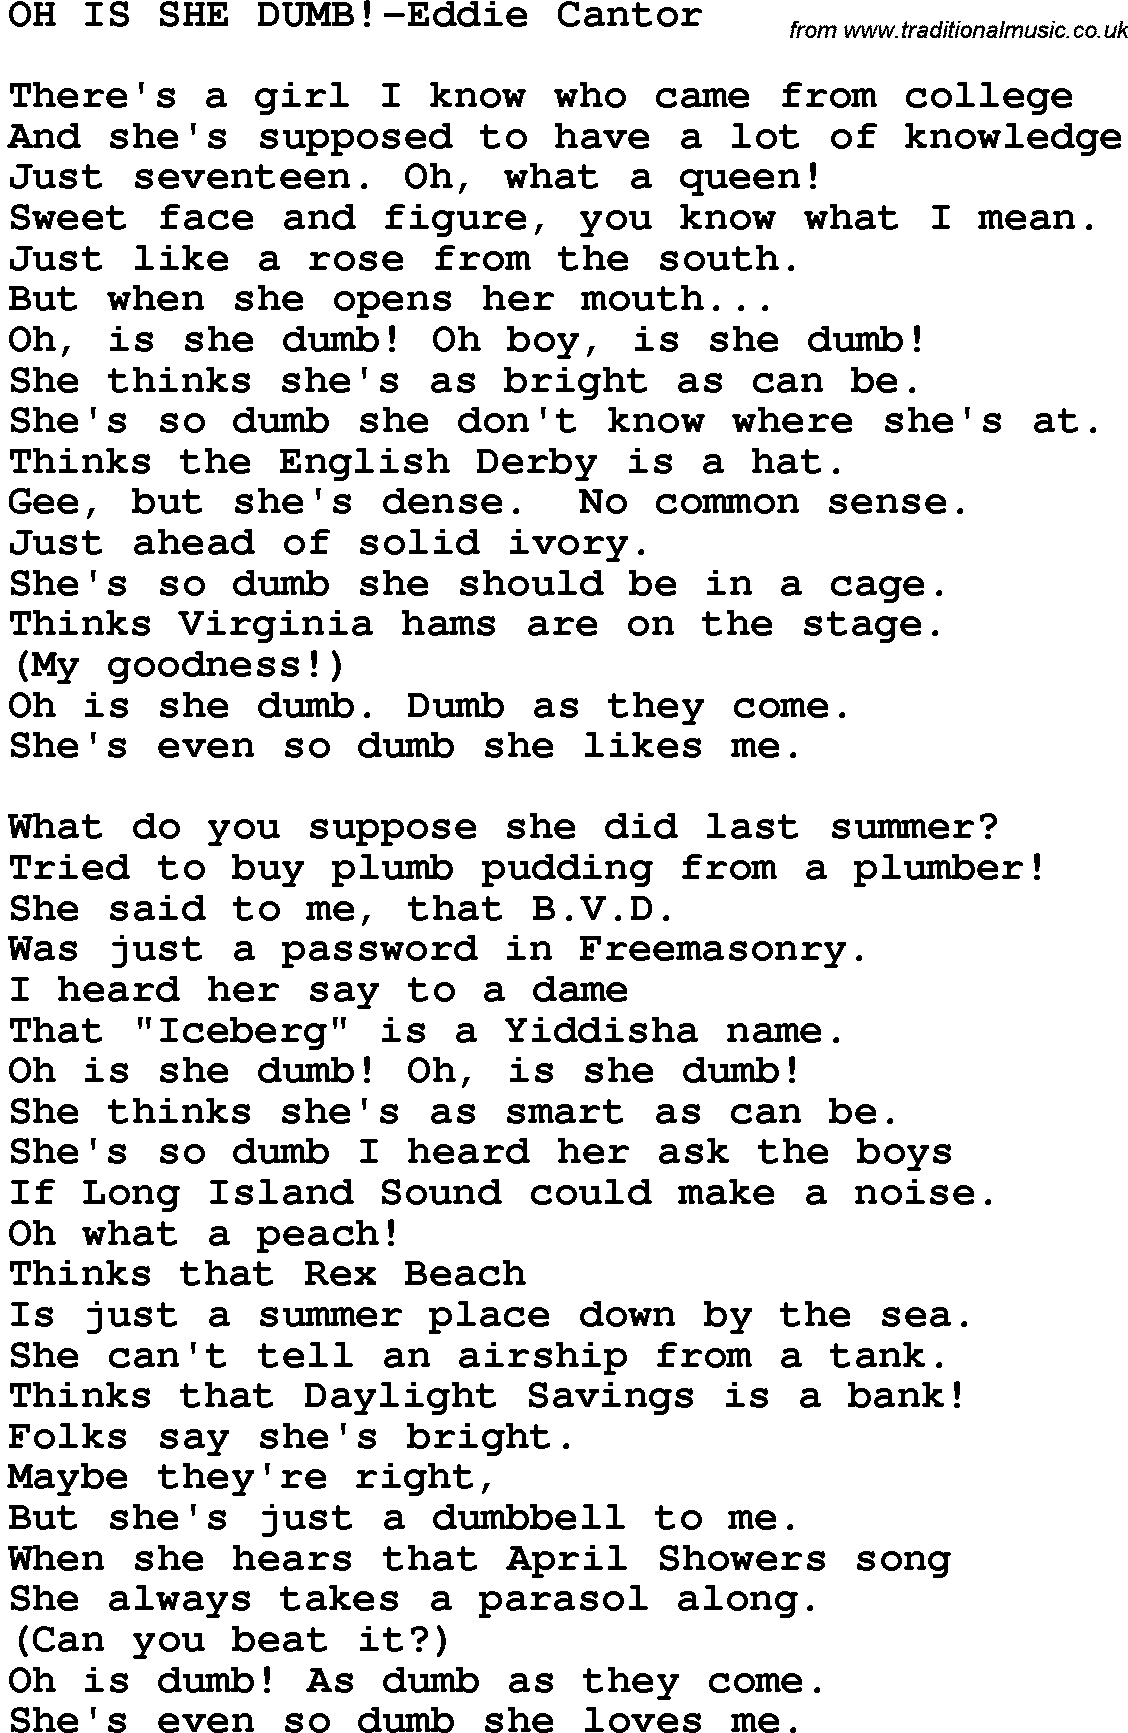 Novelty song: Oh Is She Dumb!-Eddie Cantor lyrics